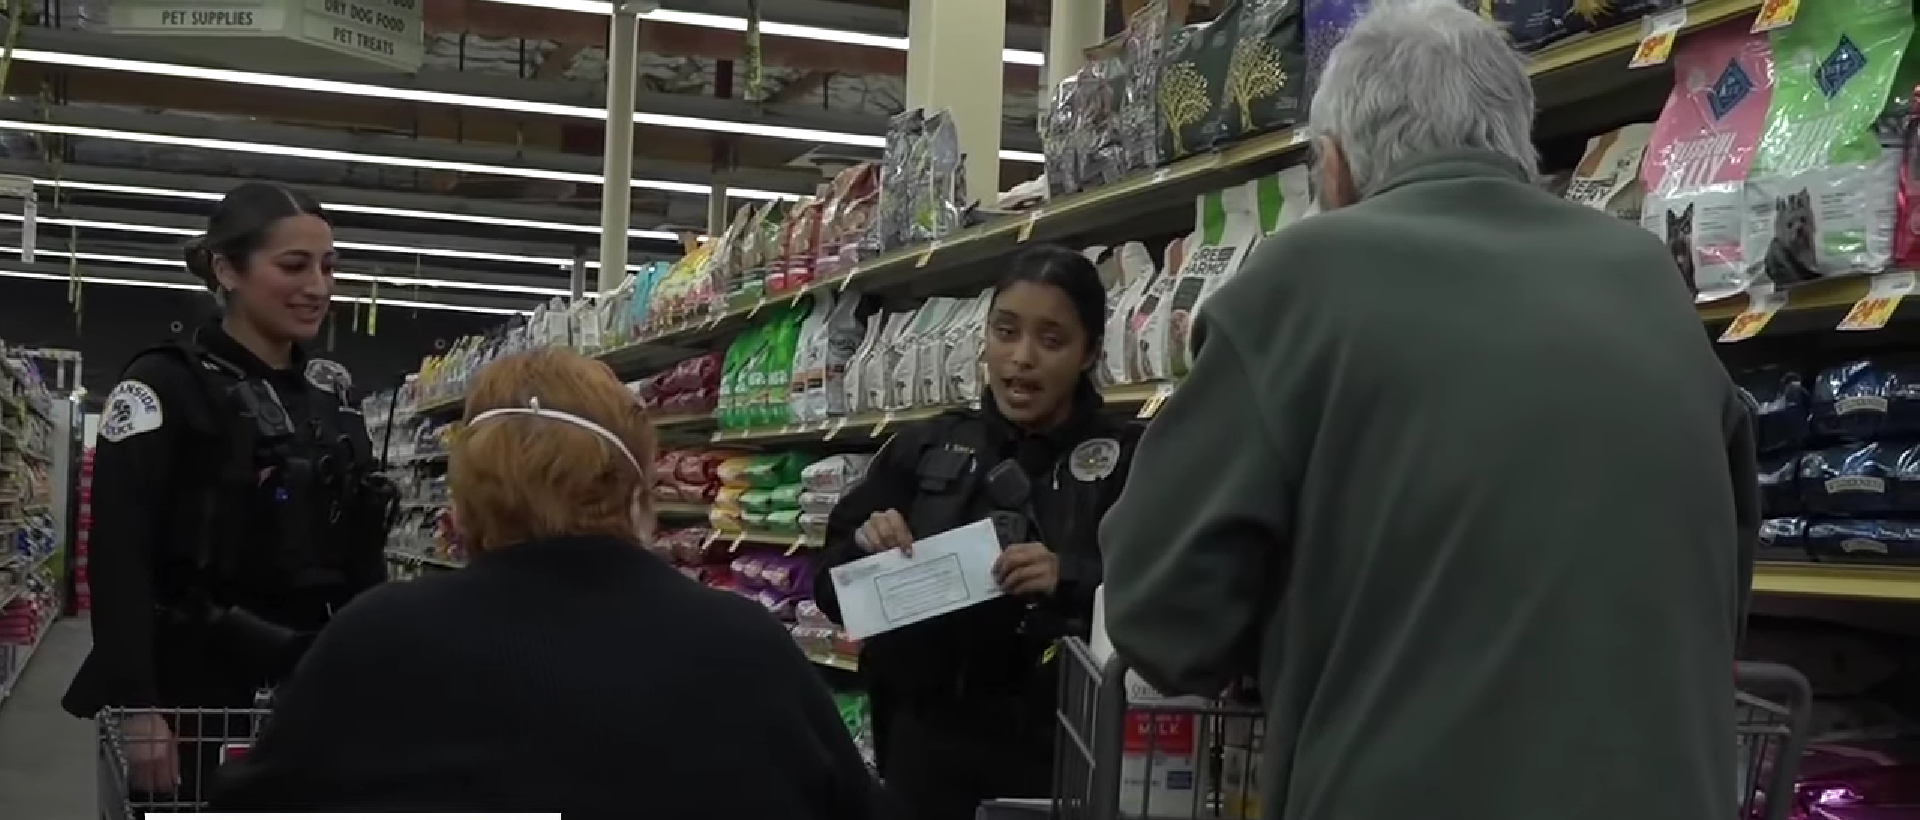 Oceanside Police Gift Random Strangers $100 Cash To Help Pay For Groceries